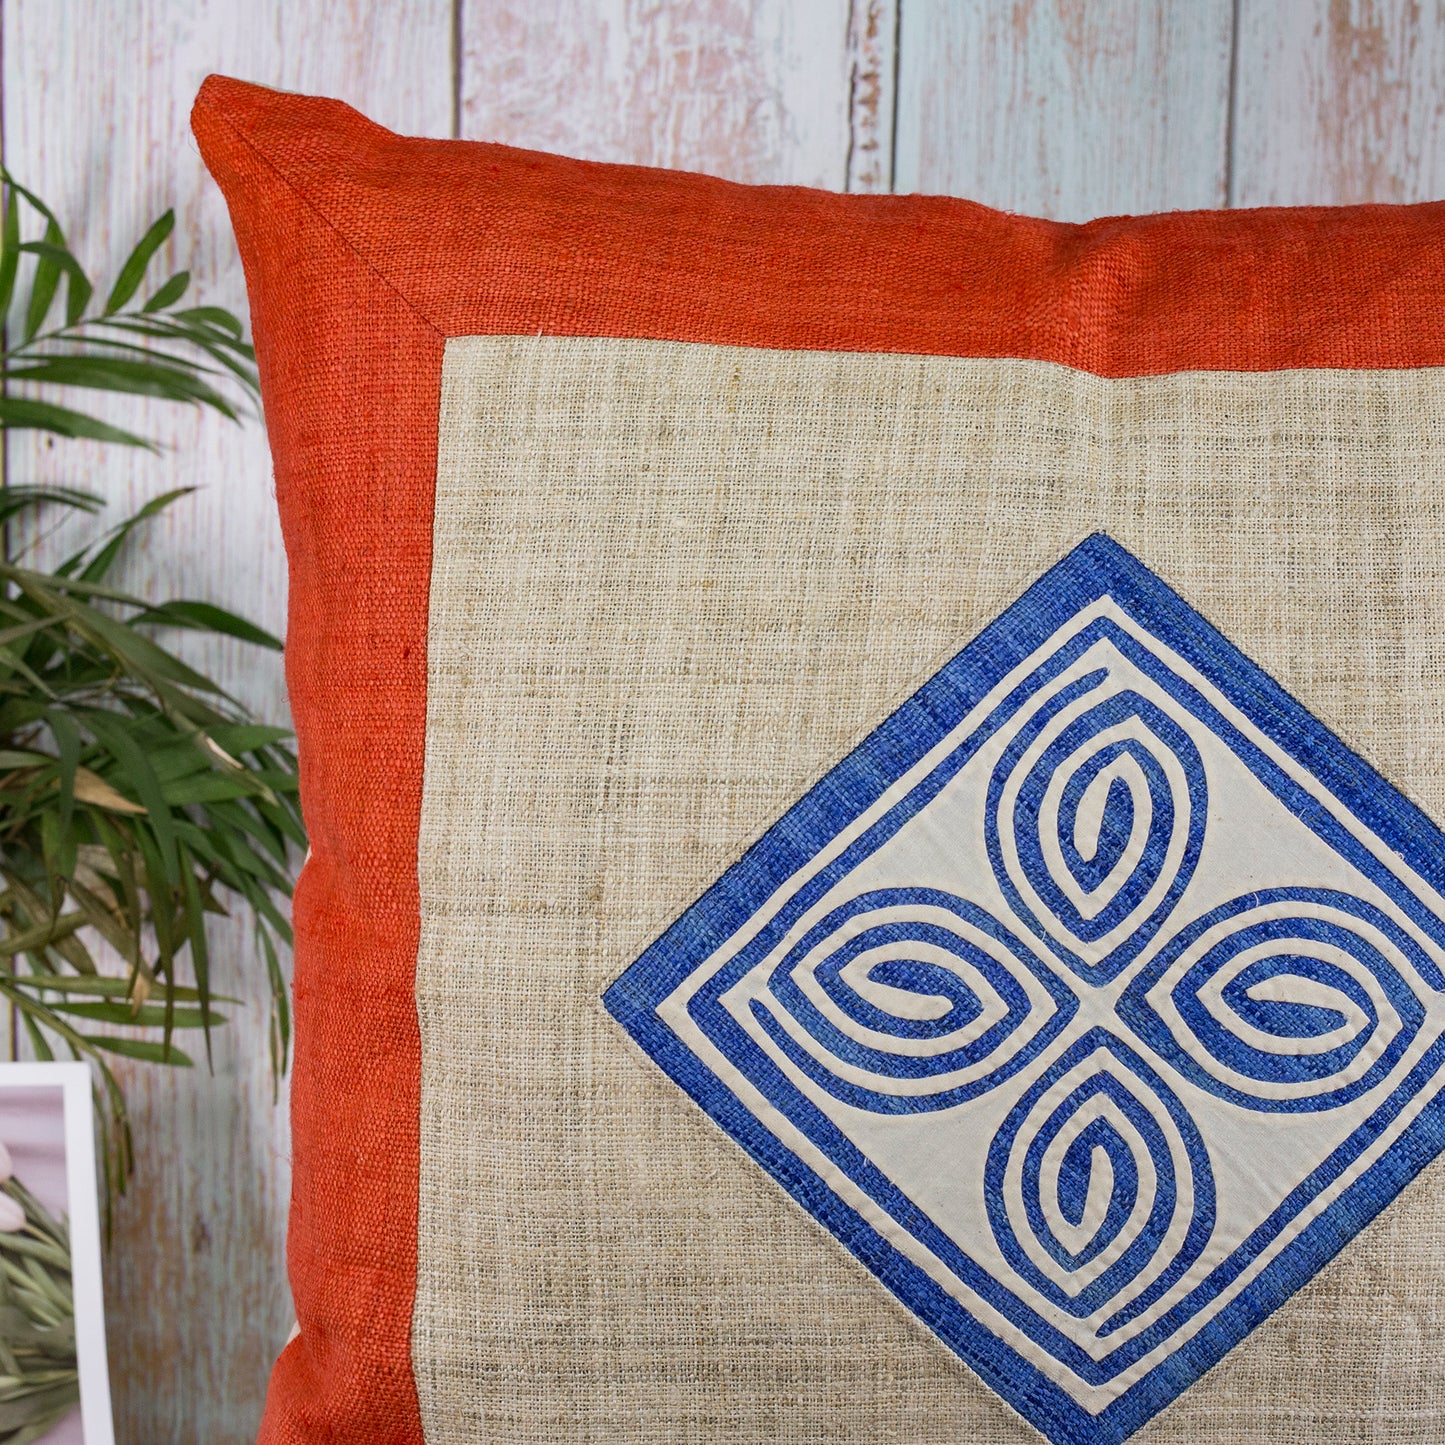 Hemp Cushion Cover in Red- 100% handmade, beige hemp at center